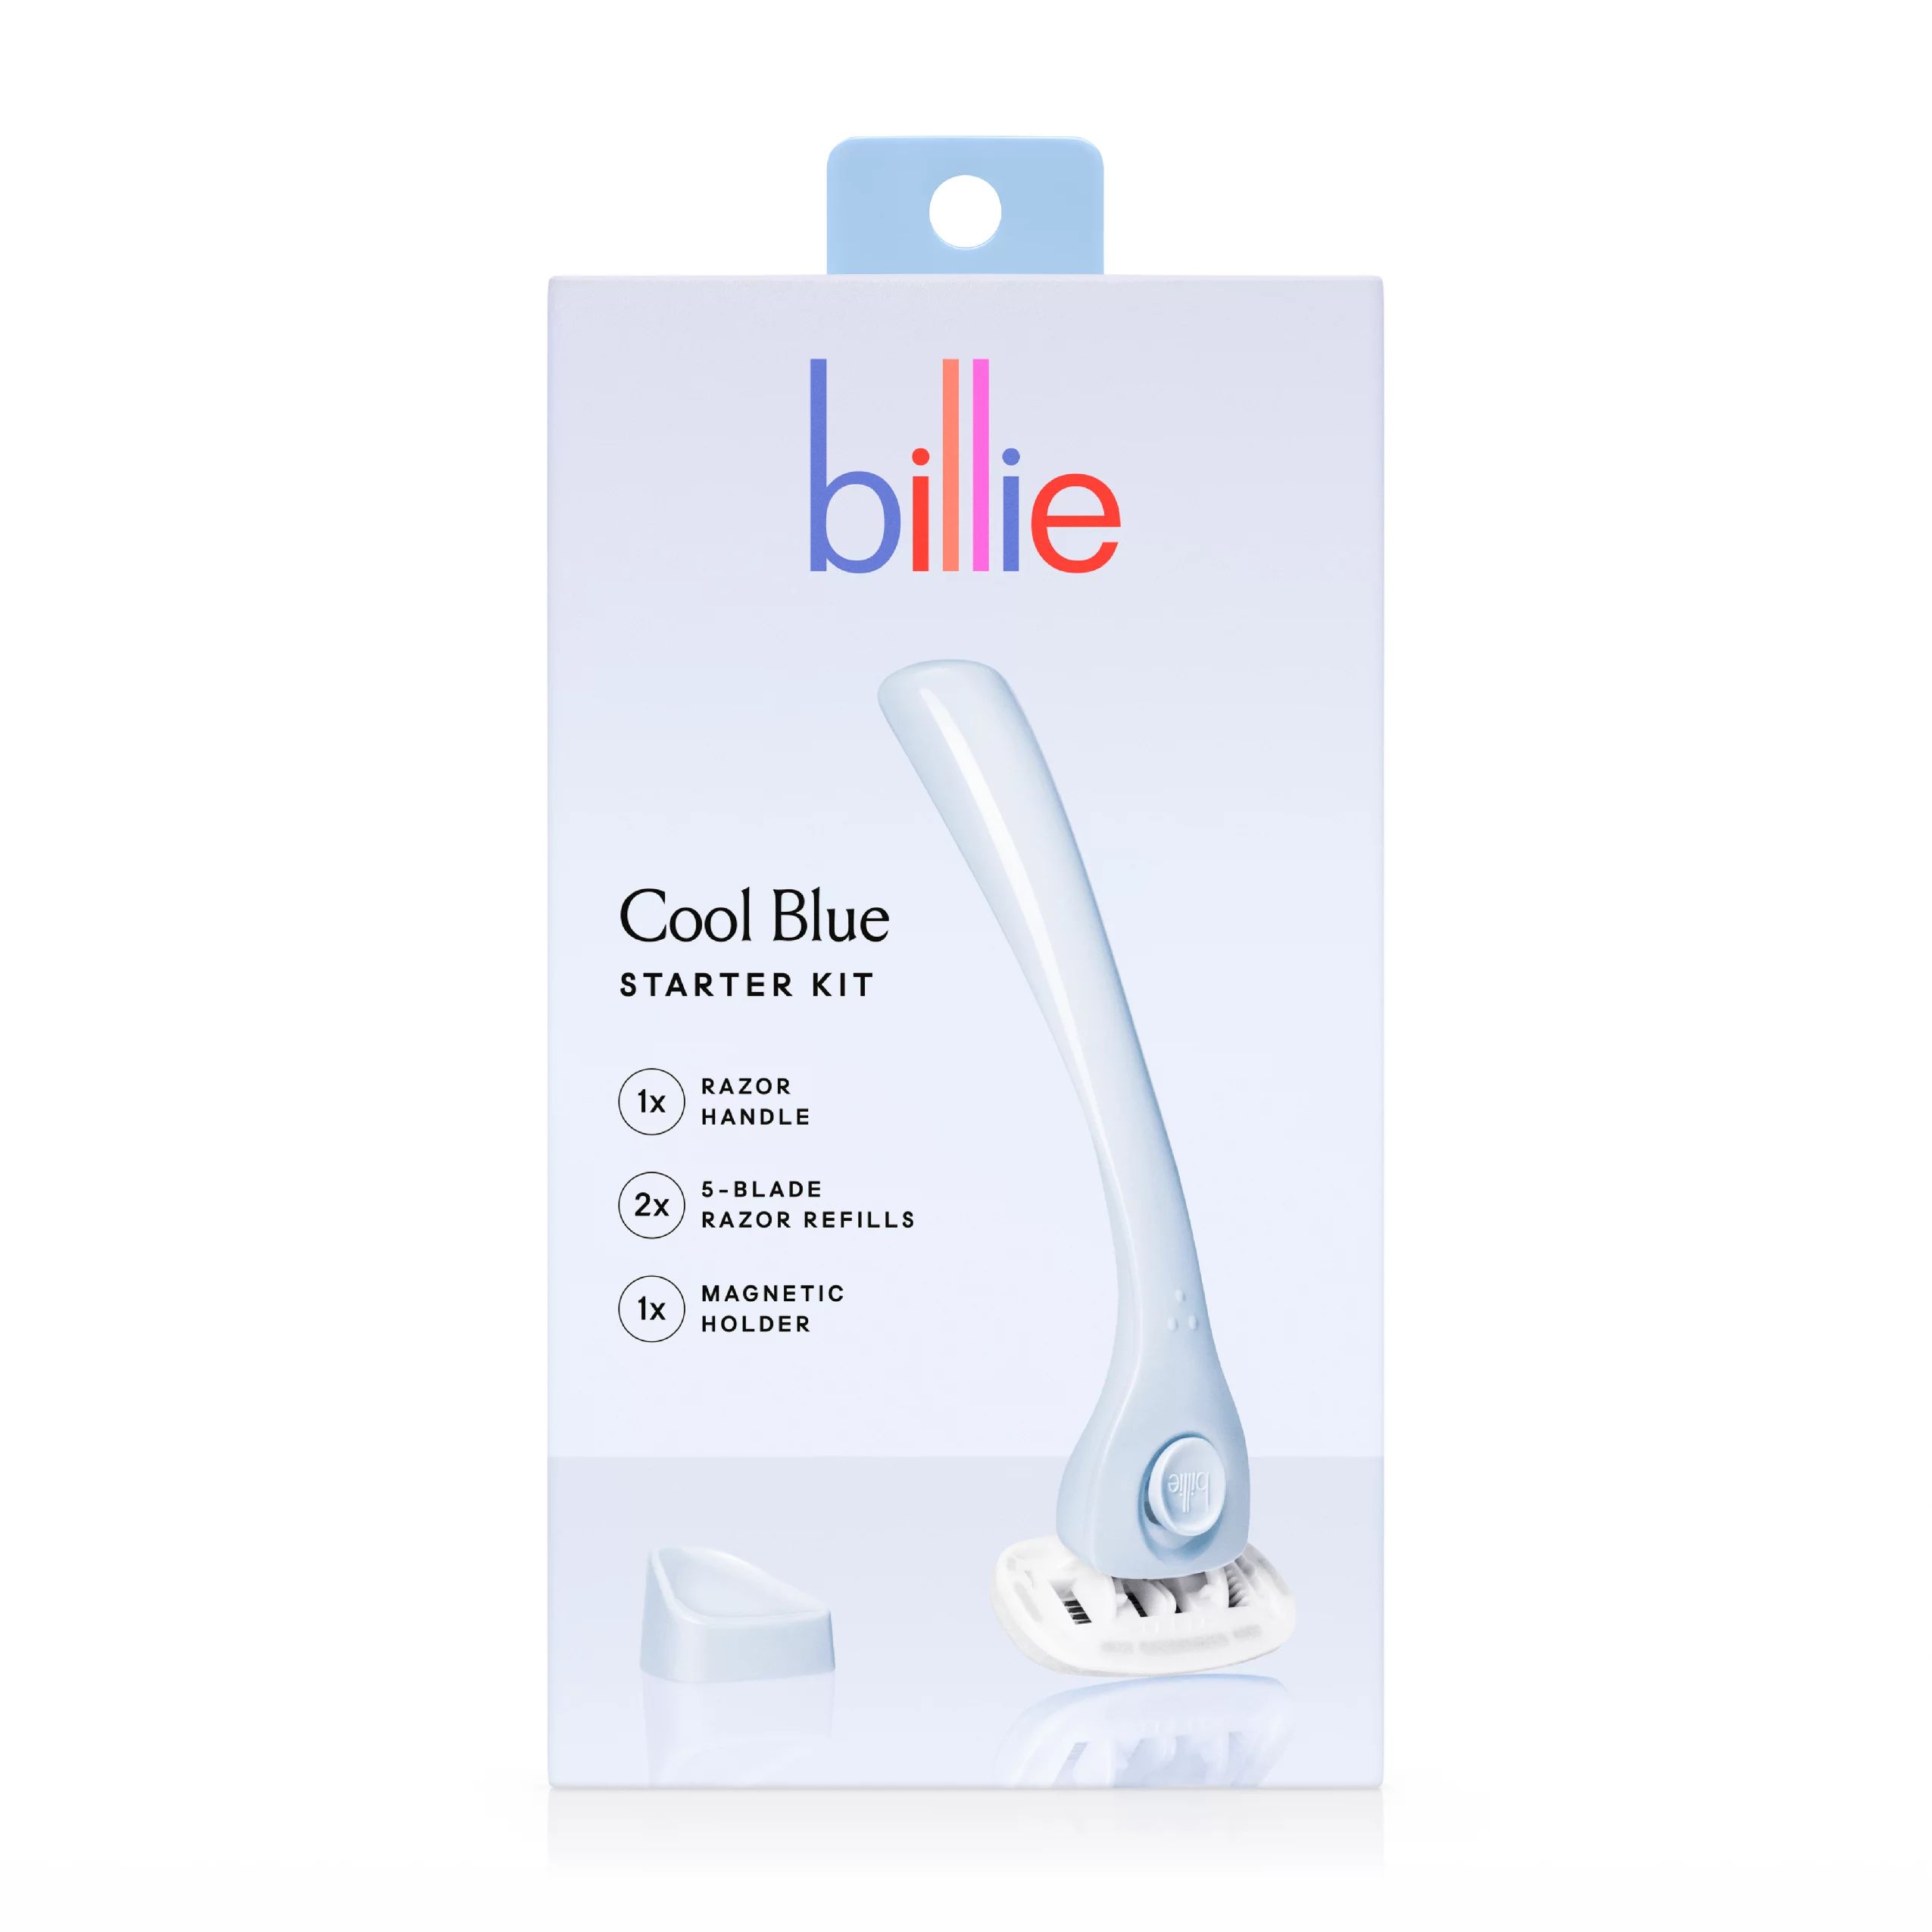 Billie Women’s Razor Kit - 1 Handle + 2 Blade Refills + Magnetic Holder - Cool Blue | Walmart (US)